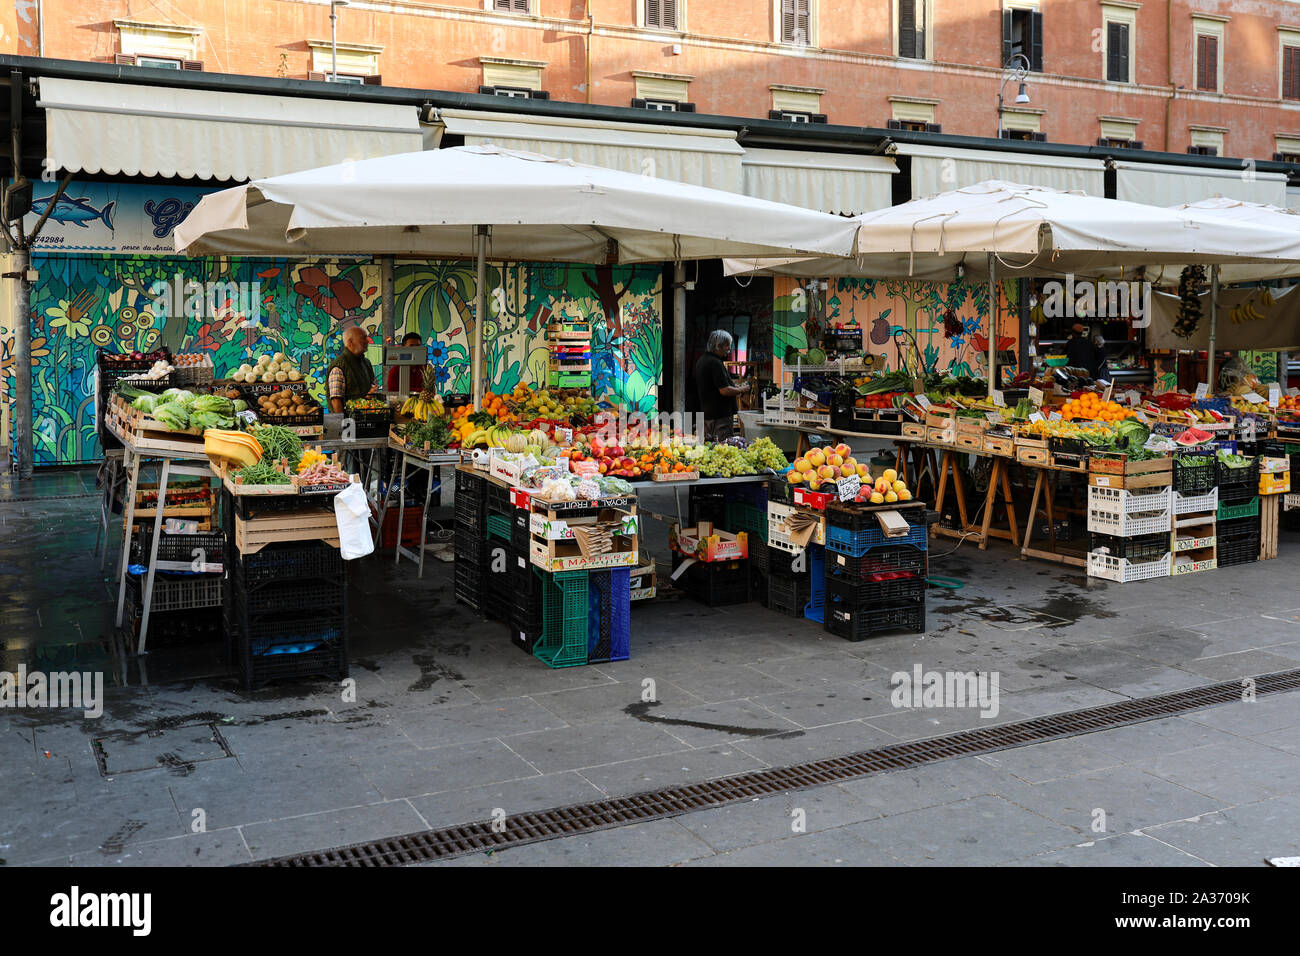 Mercato di San Cosimato - fruit and vegetable market - in Trastevere district of Rome, Italy Stock Photo